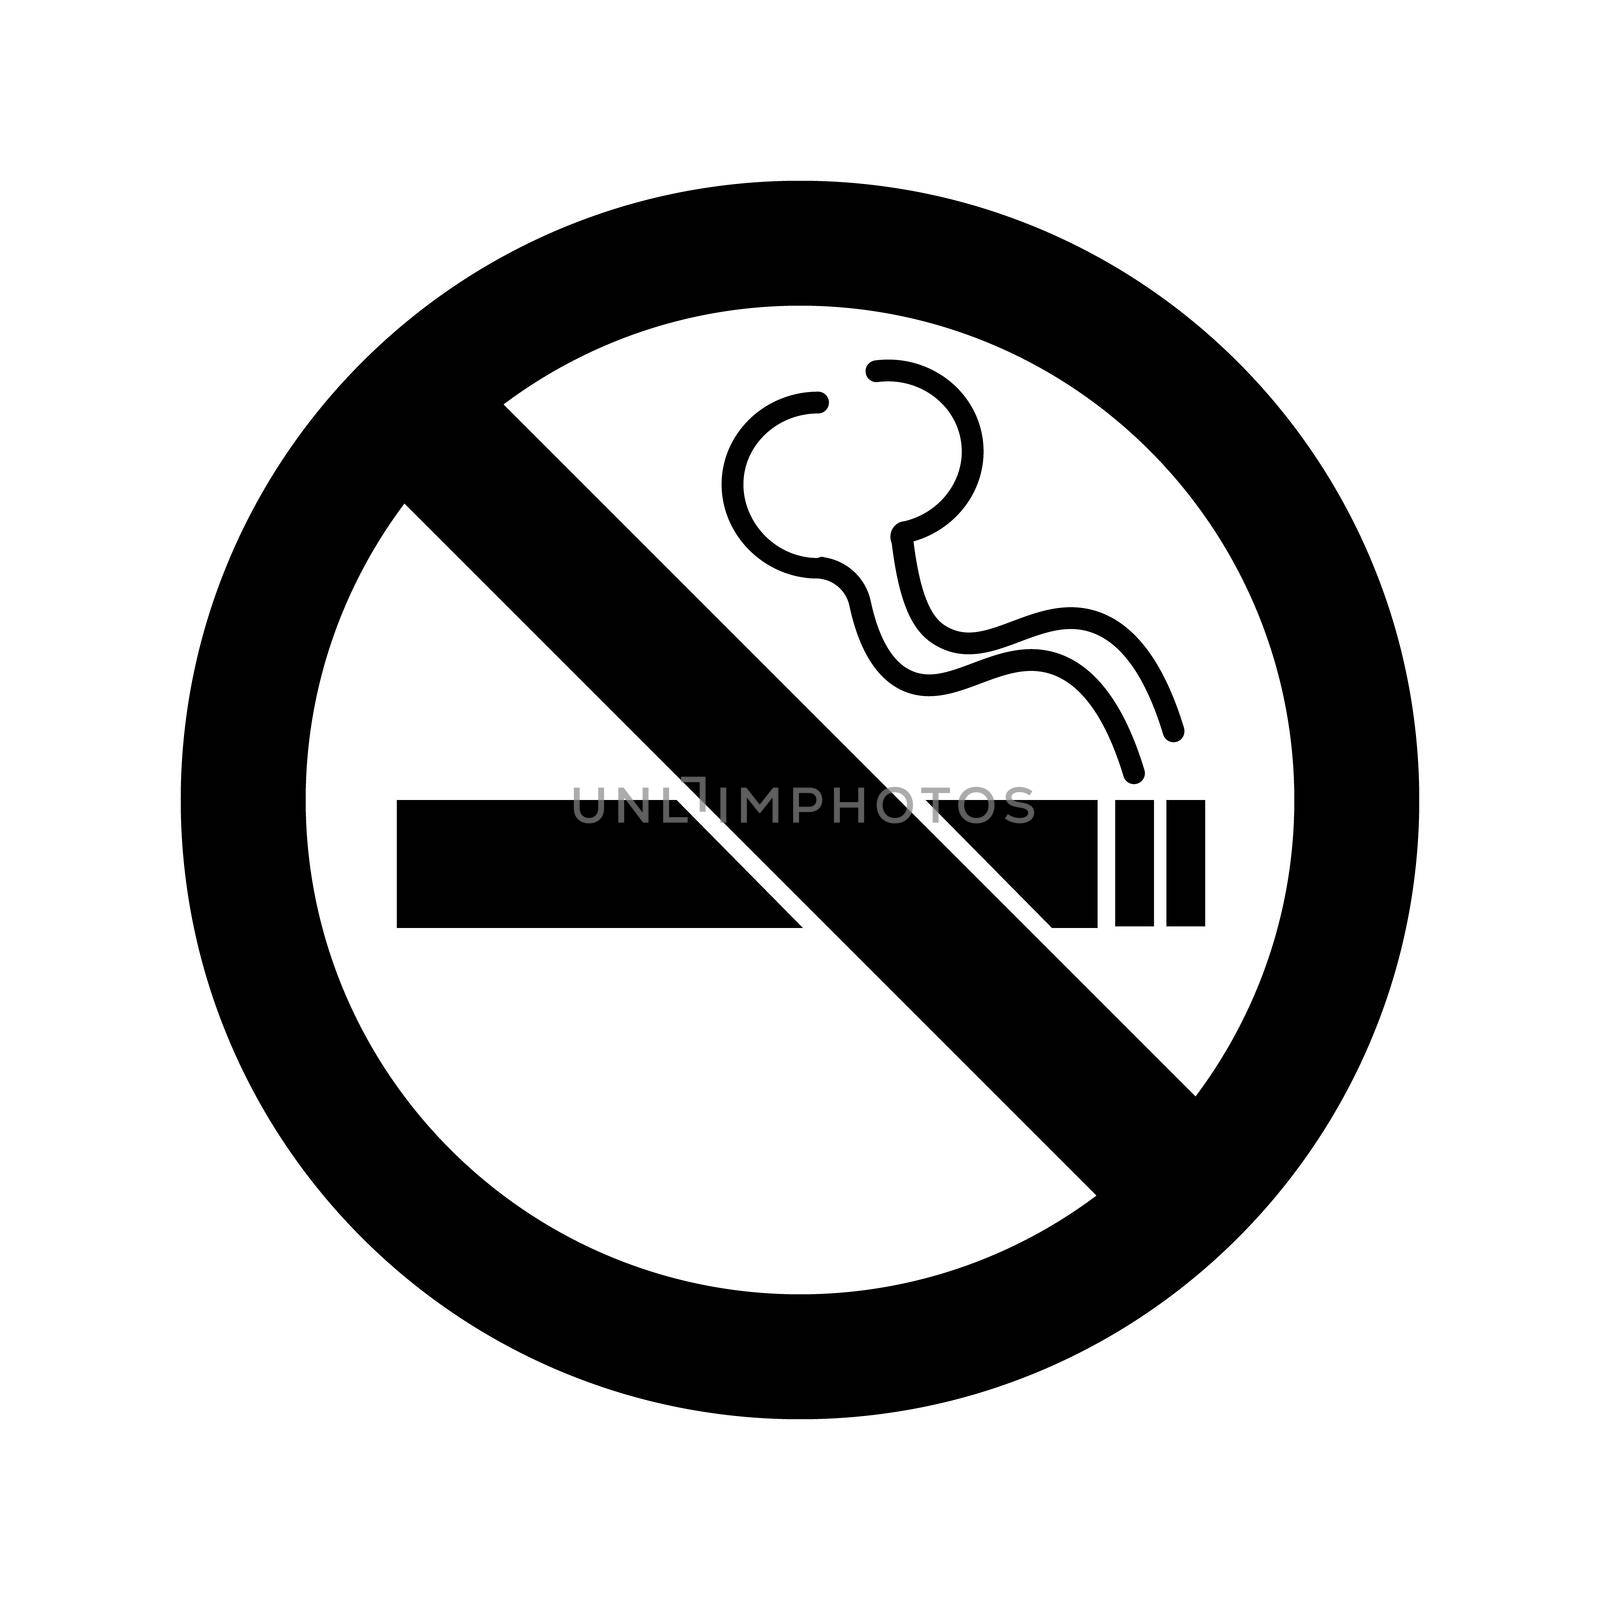 No smoking sign illustration icon eps on white background